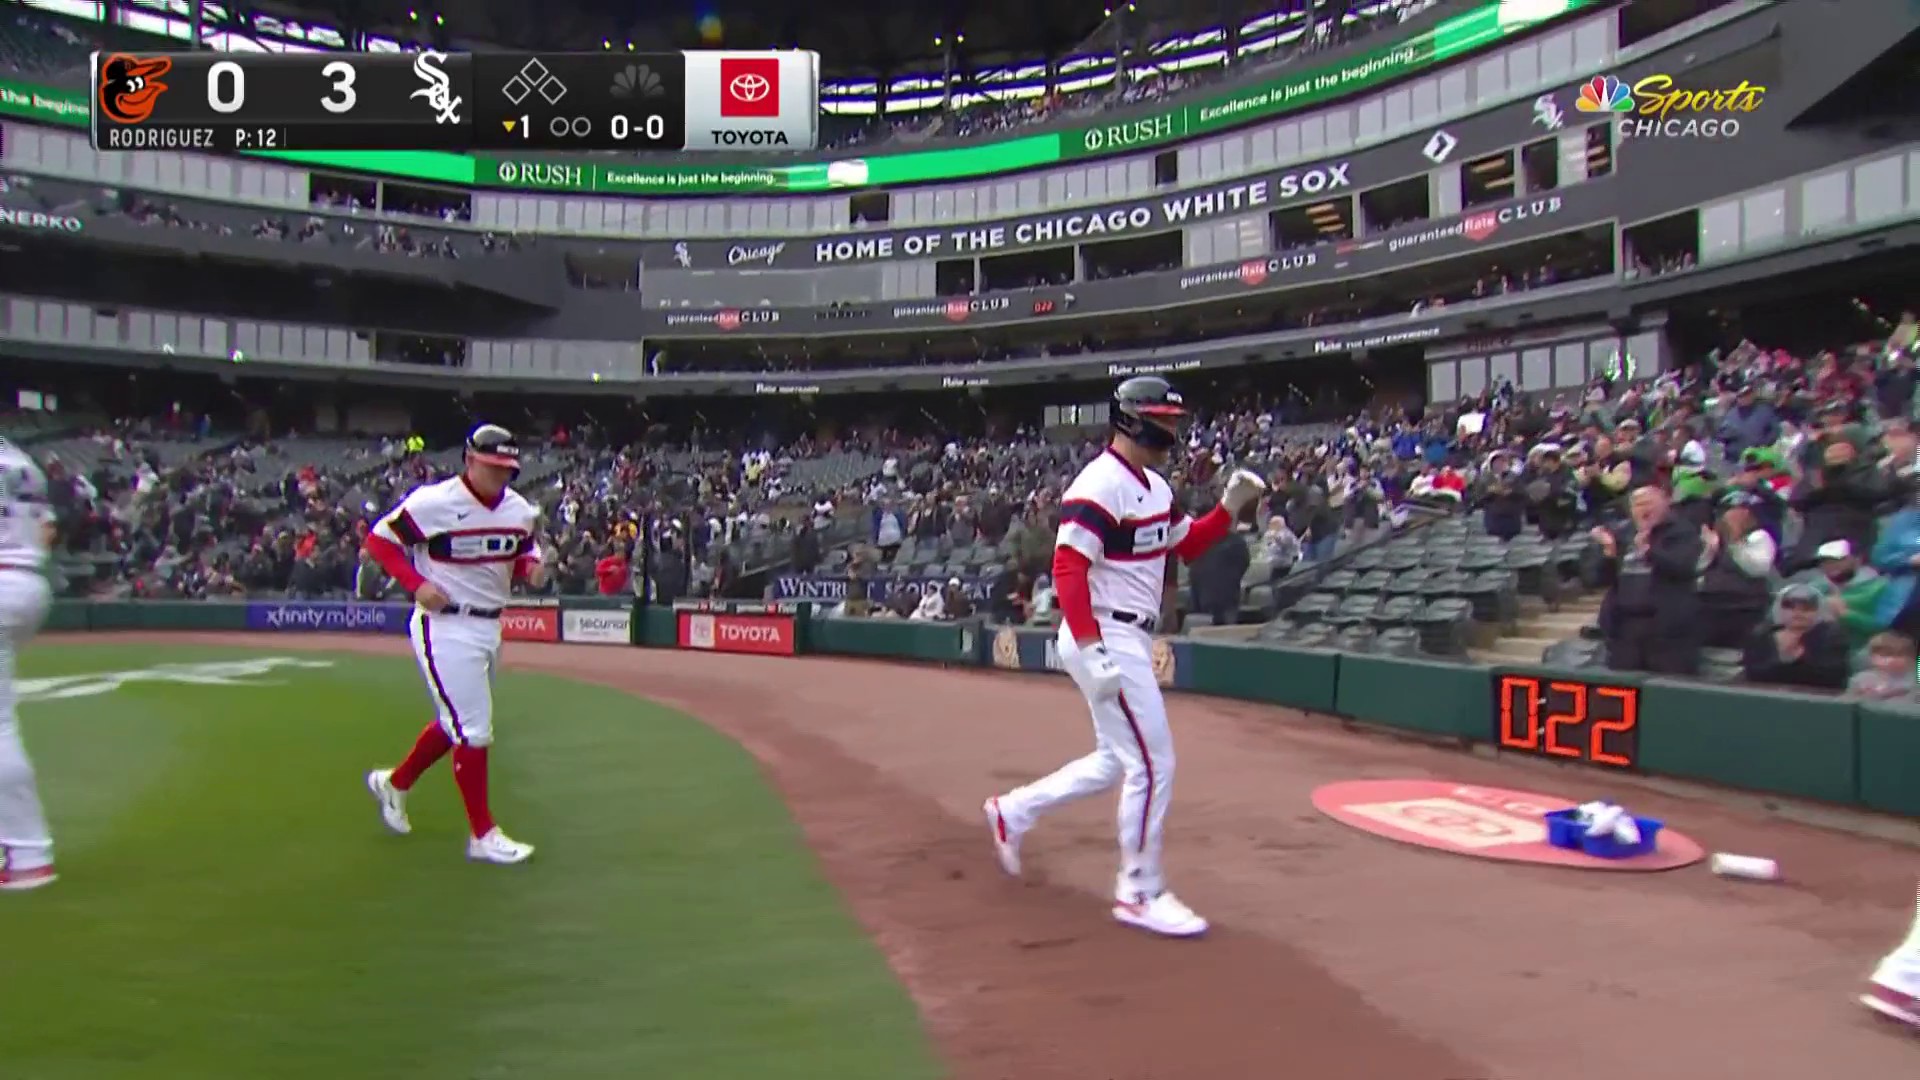 WATCH: Gavin Sheets opens the scoring for White Sox with 3-run homerun –  NBC Sports Chicago